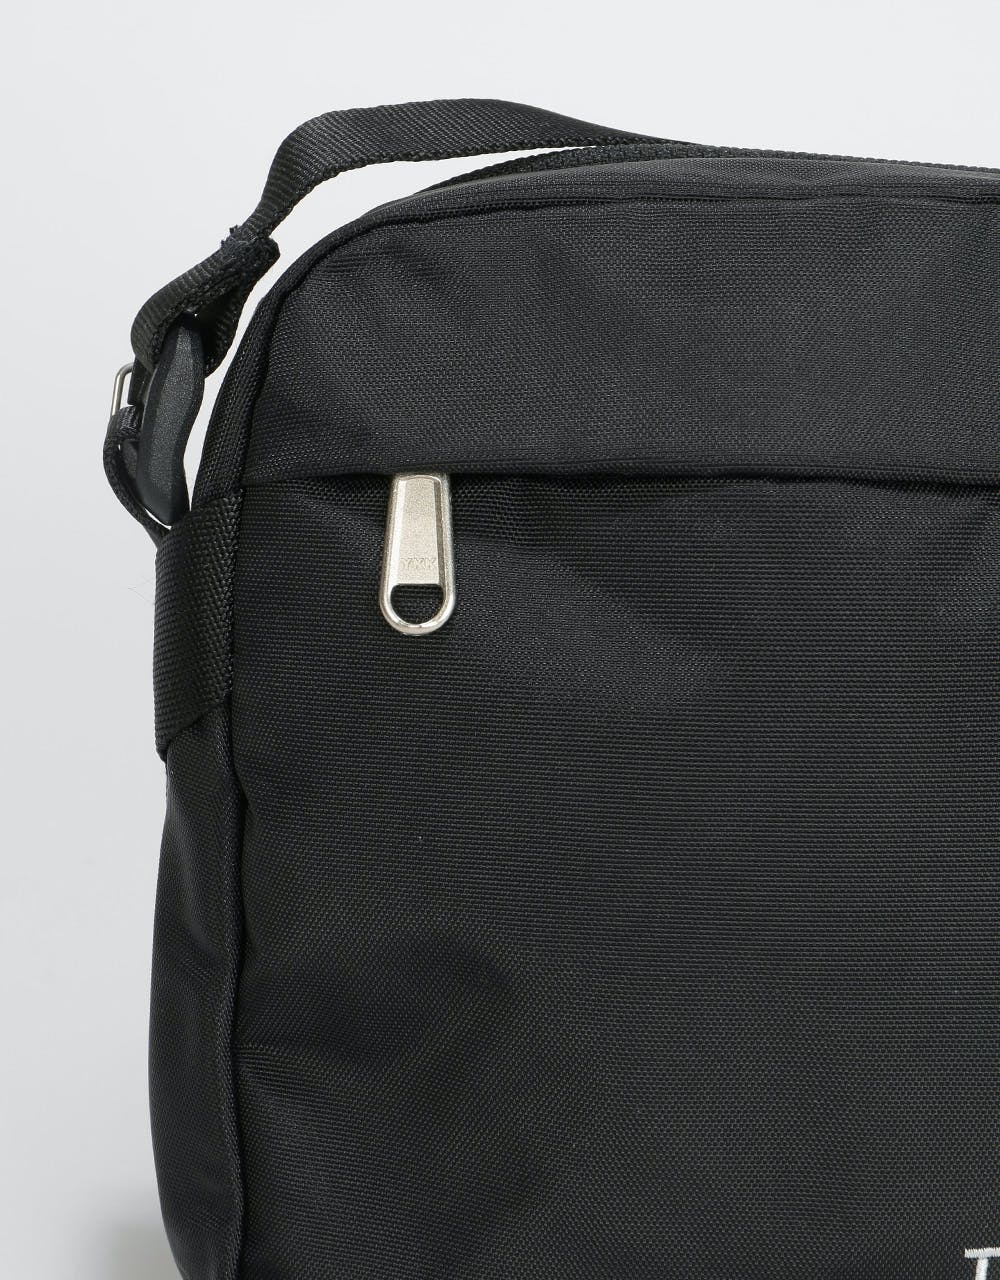 The North Face Convertible Cross Body Bag - TNF Black/High Rose Grey